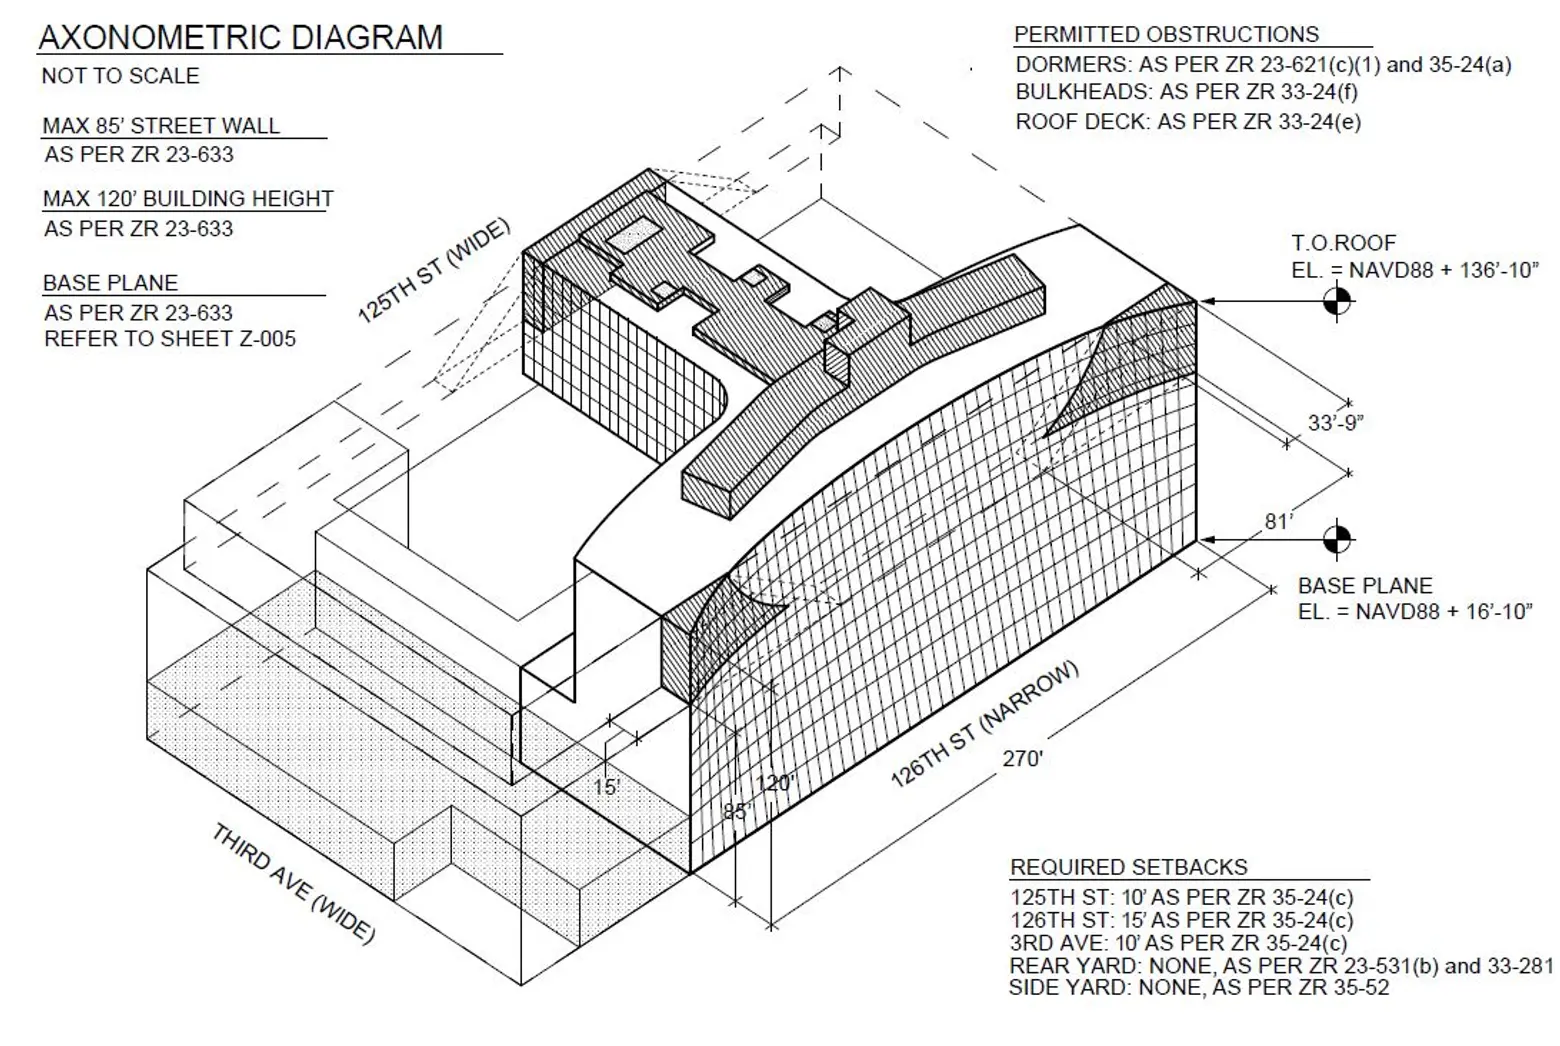 Uptown rentals, East Harlem projects, Harlem developments, Bjarke Ingels Architects, NYC renderings